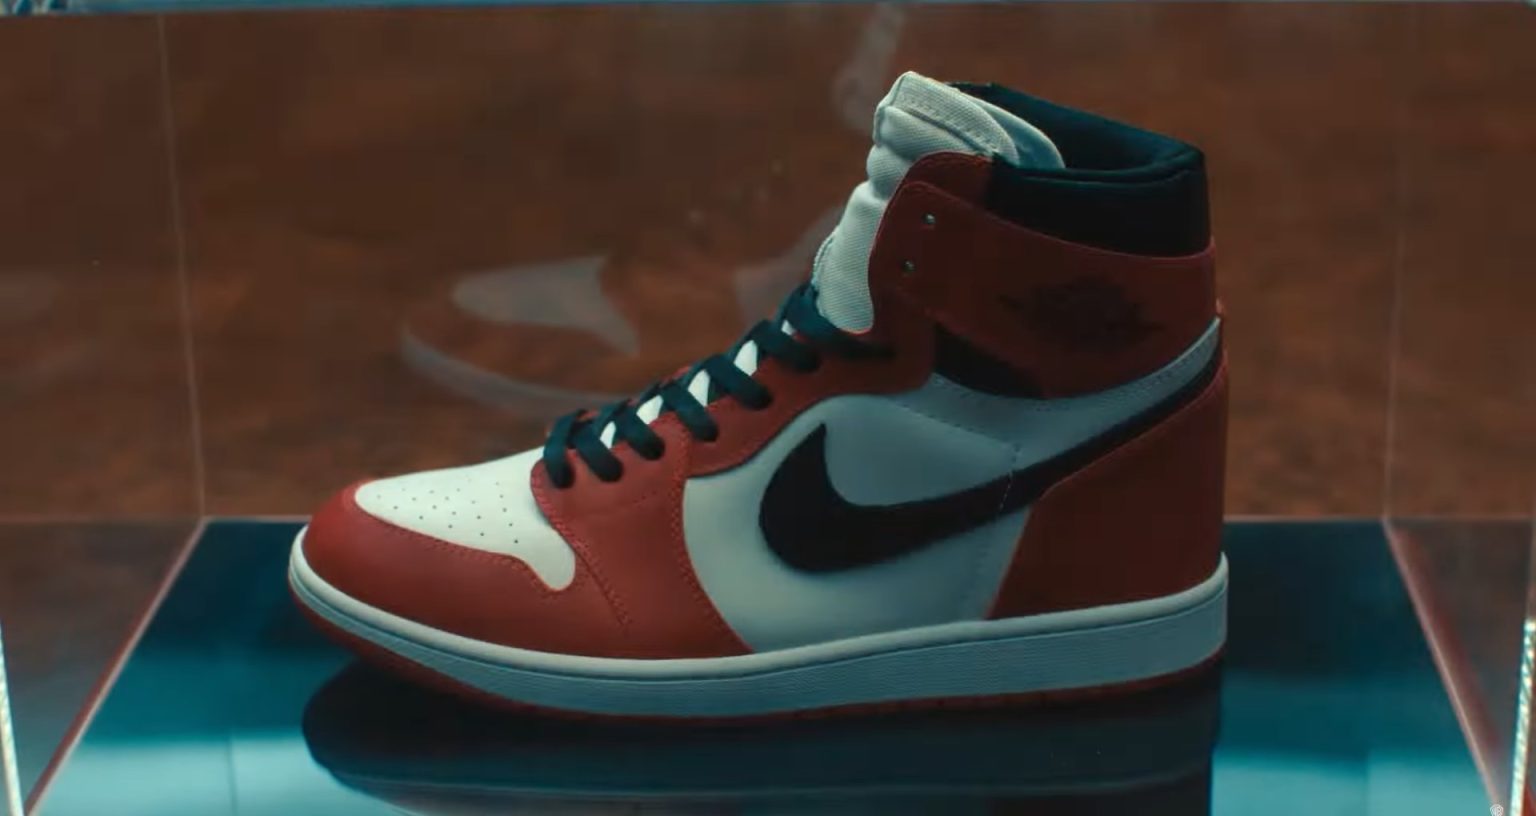 新聞分享 / 飛人幕後！講述 Nike 簽進 Michael Jordan 的電影《AIR: Courting A Legend》預告釋出